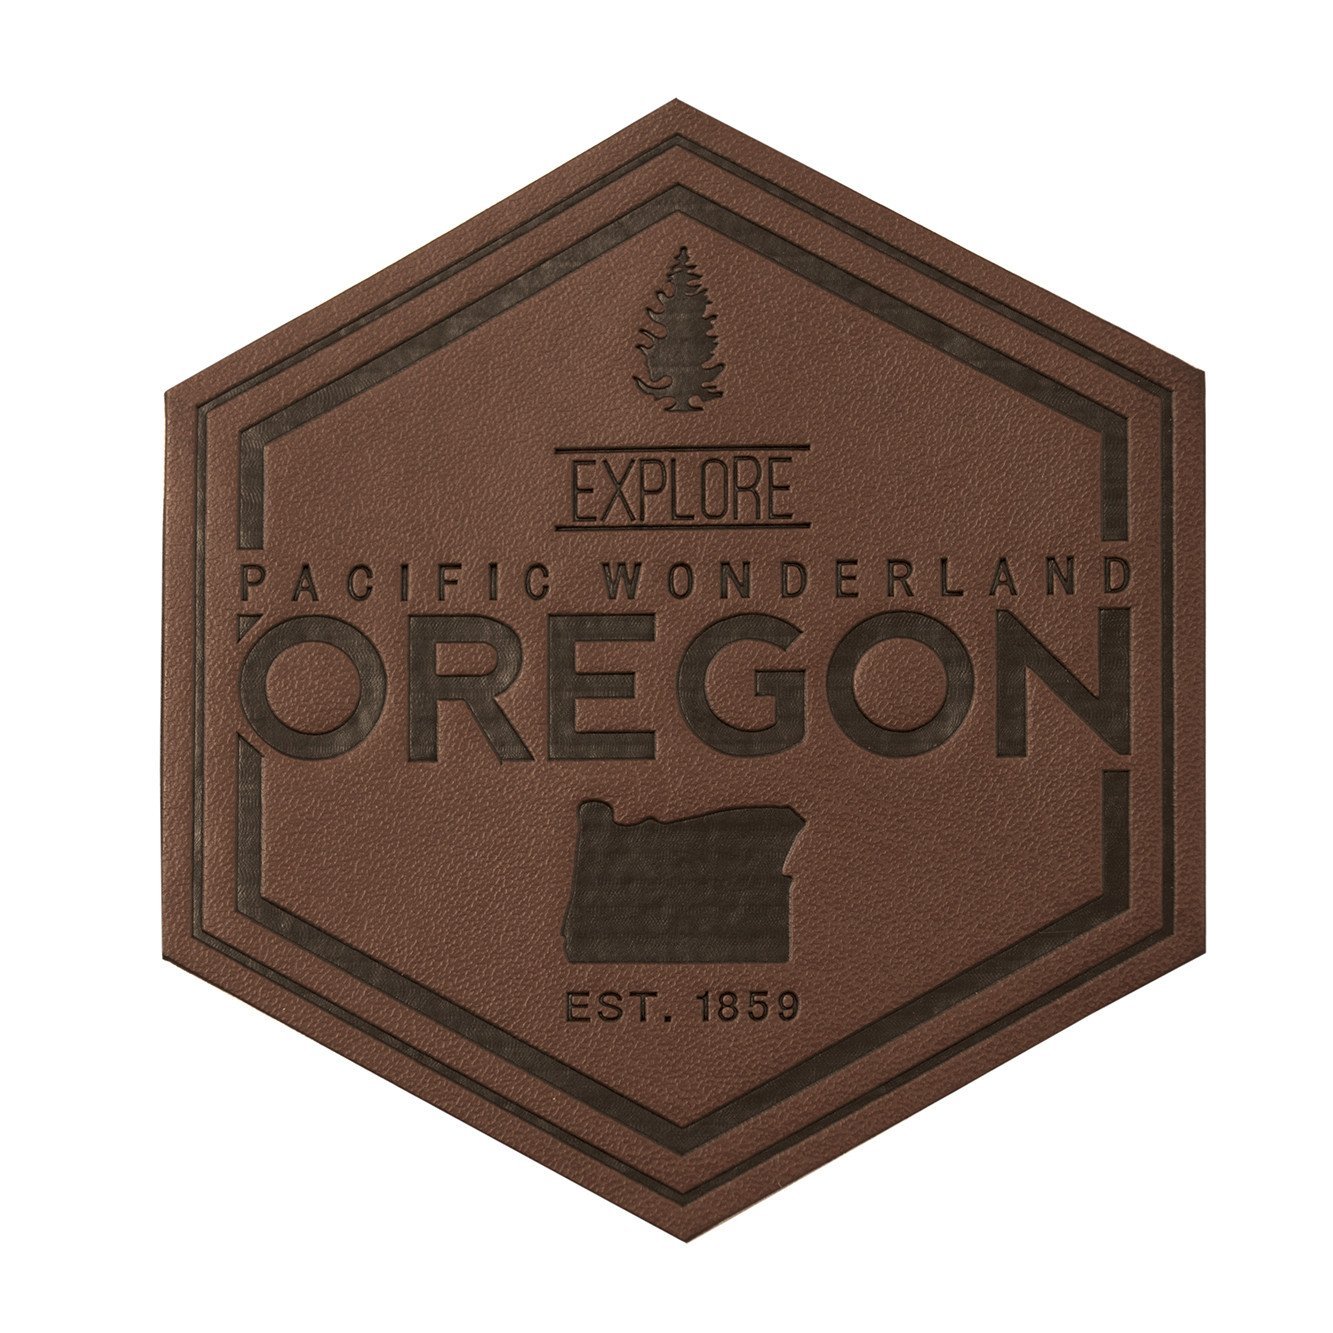 Explore Pacific Wonderland Oregon | PU Leather Patch